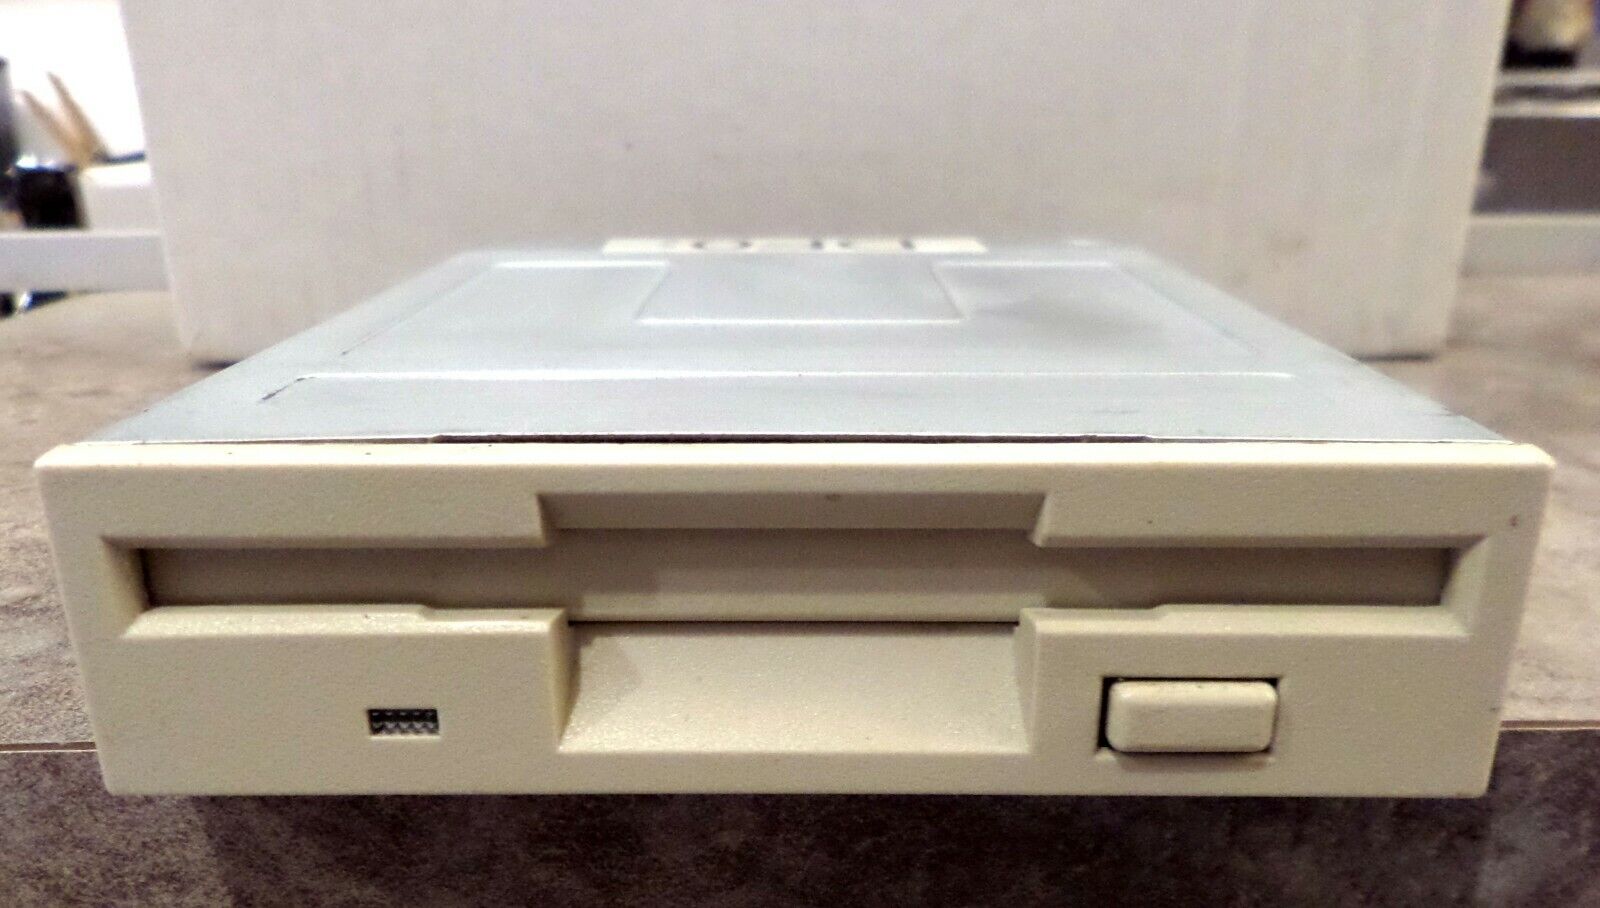 Amiga Computer Compatible Double Density Floppy Drive